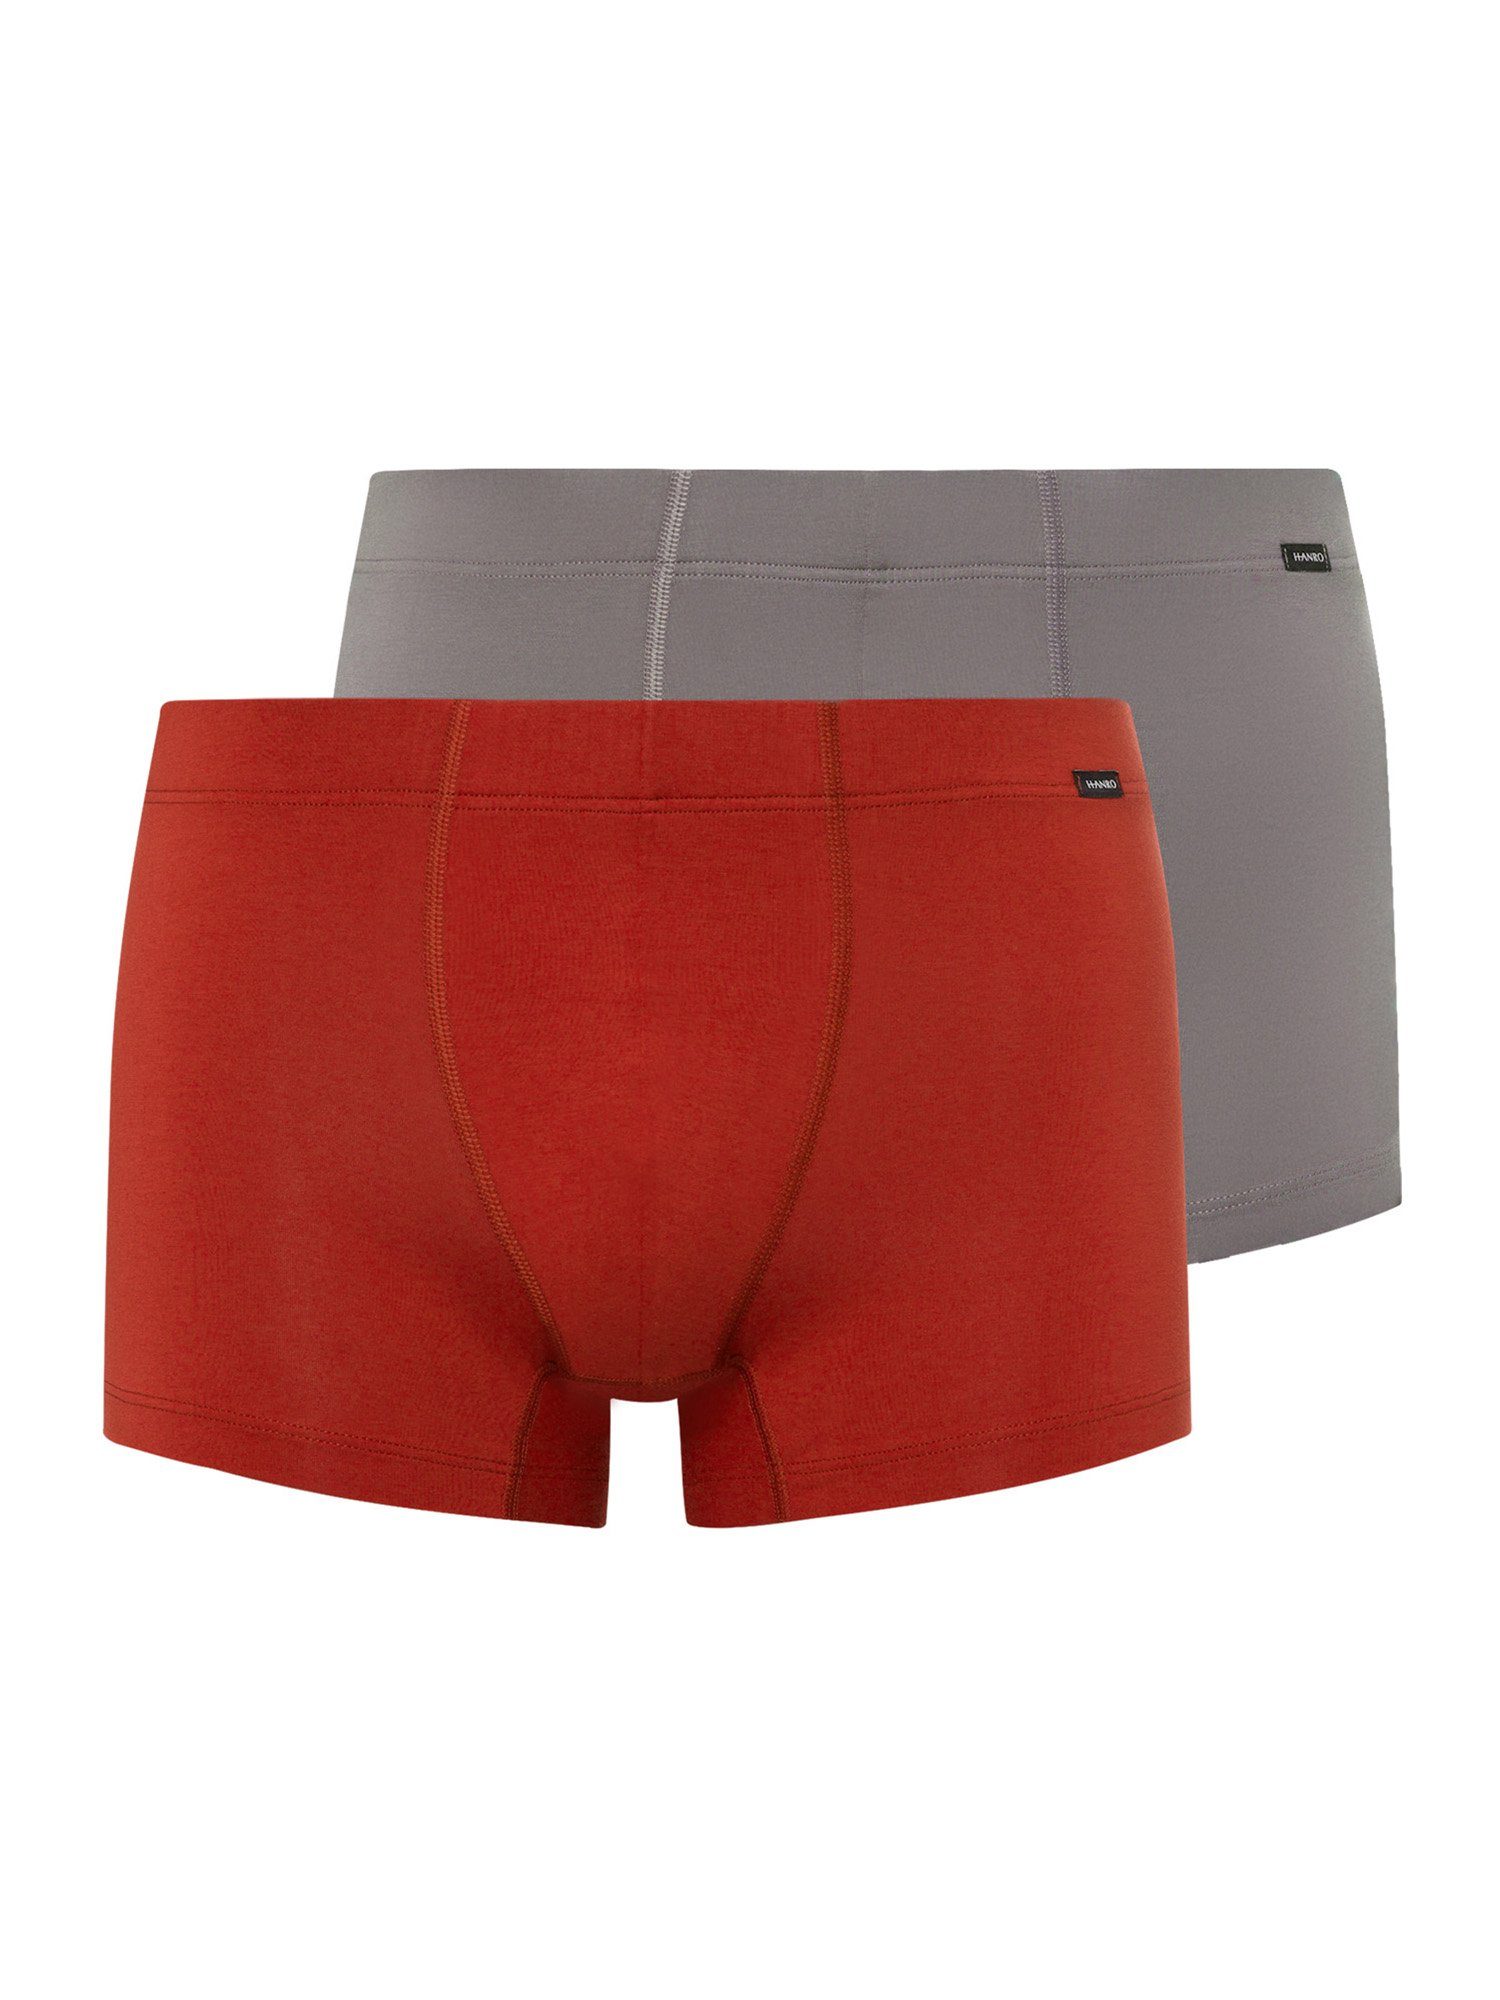 Hanro Retro Pants 2-Pack Cotton Essentials (2-St) red ochre/fresh grey